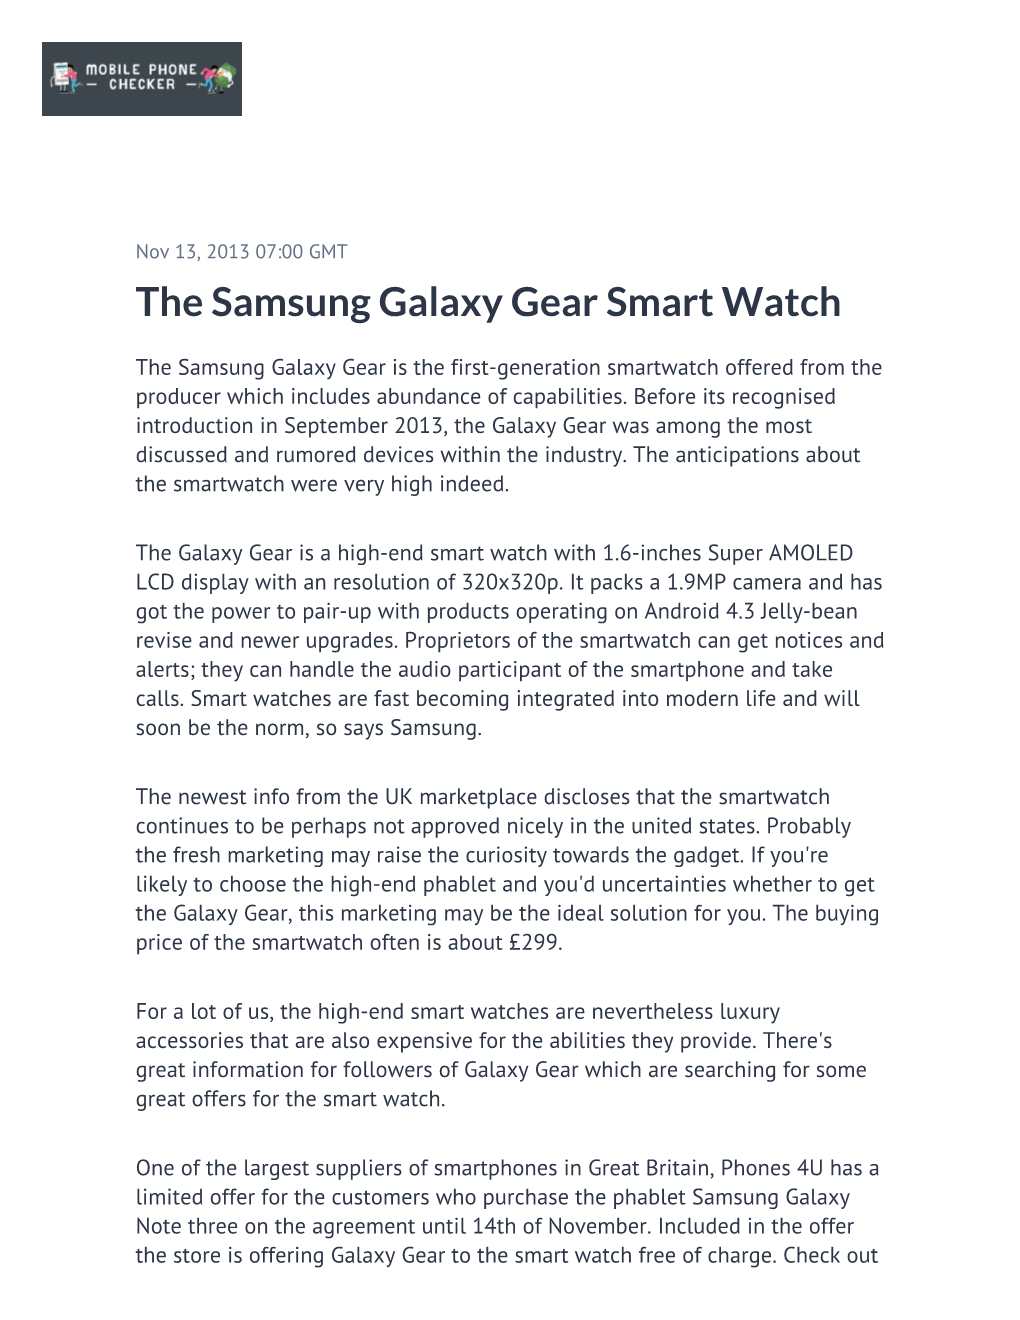 The Samsung Galaxy Gear Smart Watch